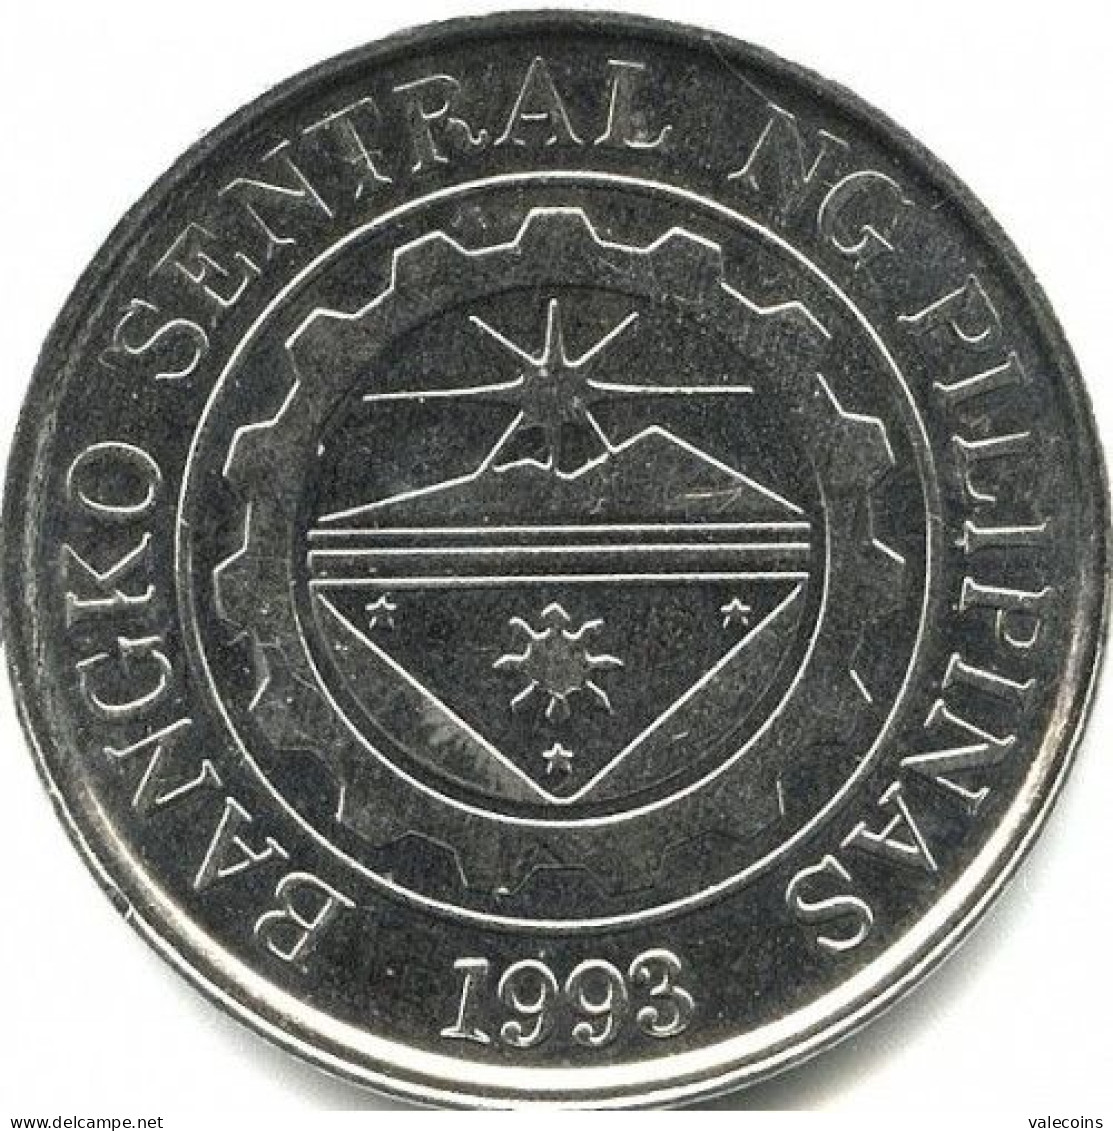 FILIPPINE PILIPINAS PHILIPPINES - 2015 - 1 Piso - KM 269a - Coin UNC - Philippinen